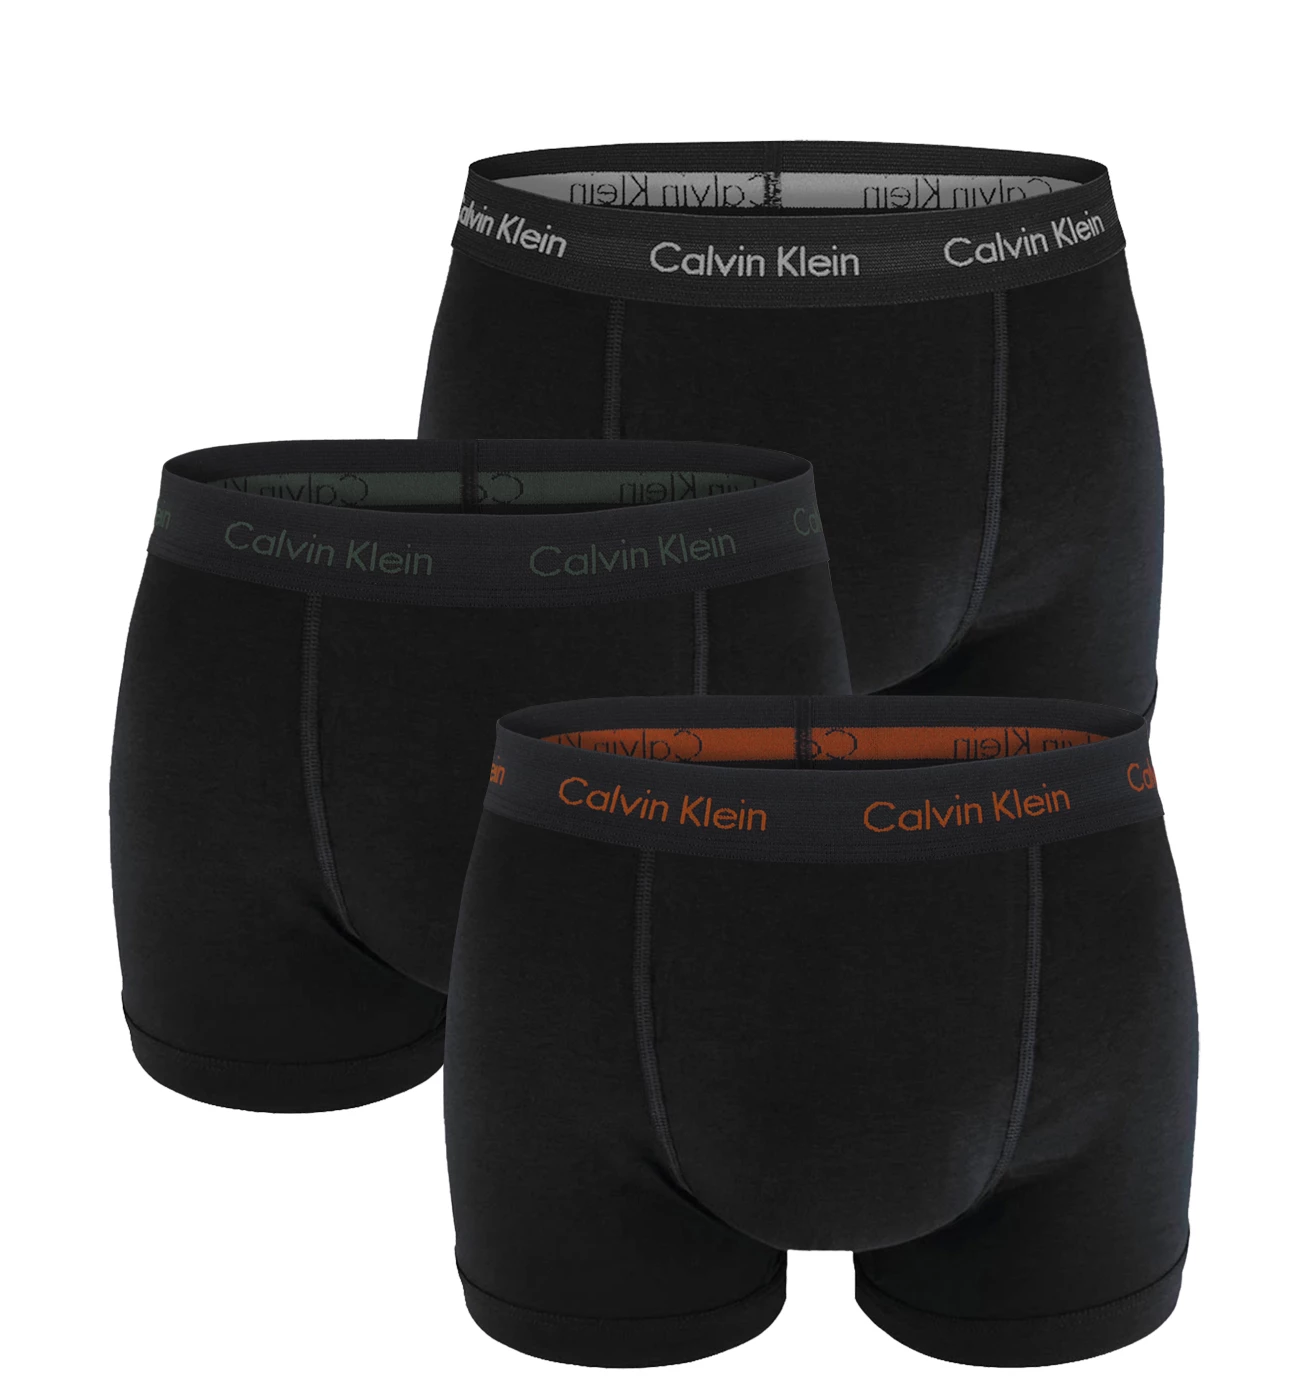 CALVIN KLEIN - boxerky 3PACK cotton stretch classic black with color logo waist - limitovaná edícia